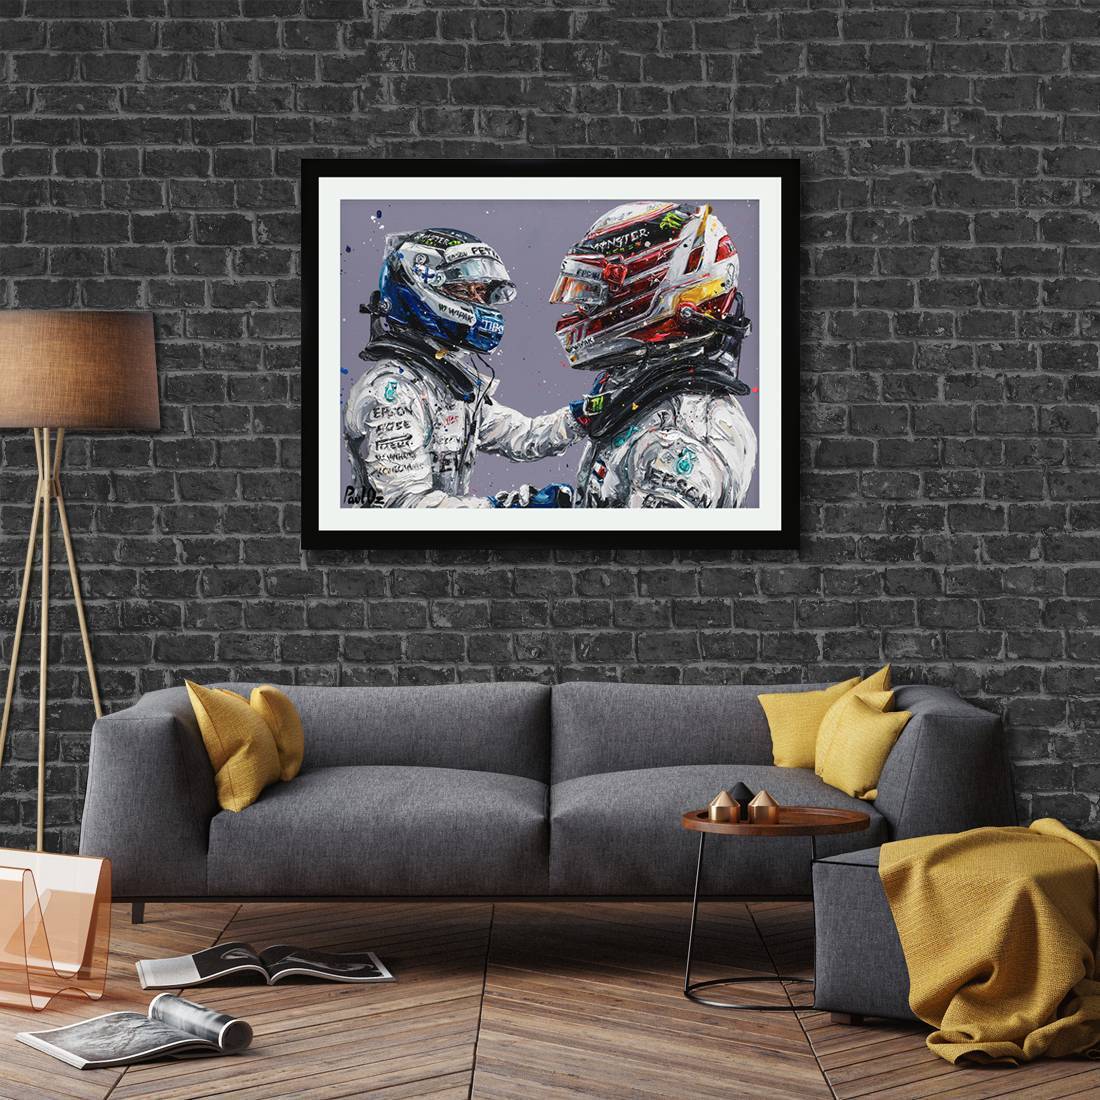 Lewis Hamilton & Valtteri Bottas Artwork - Paul Oz